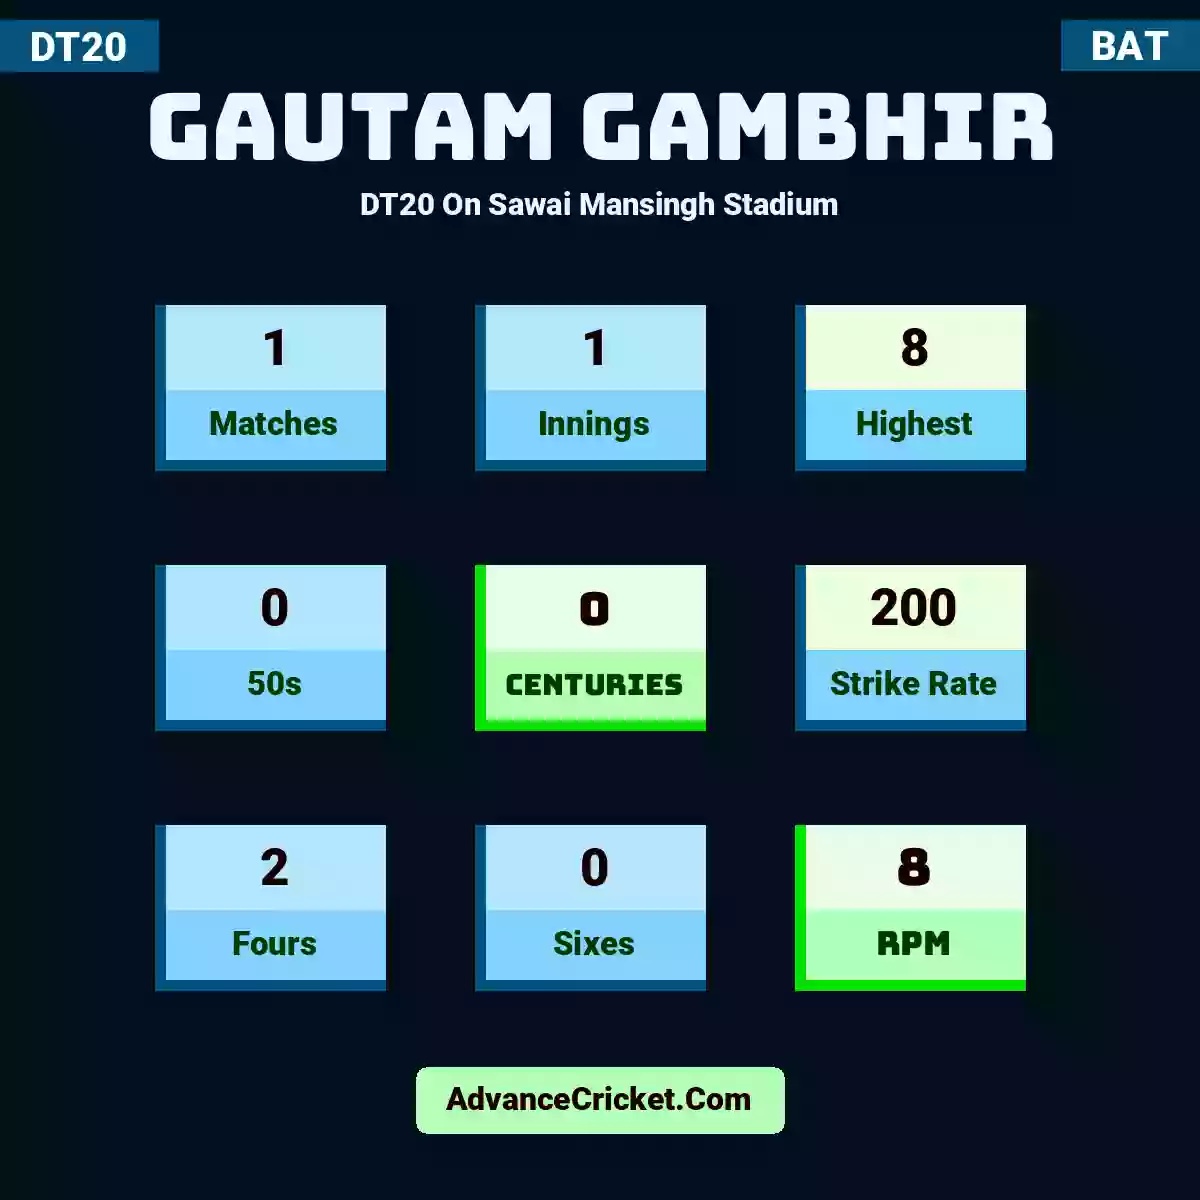 Gautam Gambhir DT20  On Sawai Mansingh Stadium, Gautam Gambhir played 1 matches, scored 8 runs as highest, 0 half-centuries, and 0 centuries, with a strike rate of 200. G.Gambhir hit 2 fours and 0 sixes, with an RPM of 8.